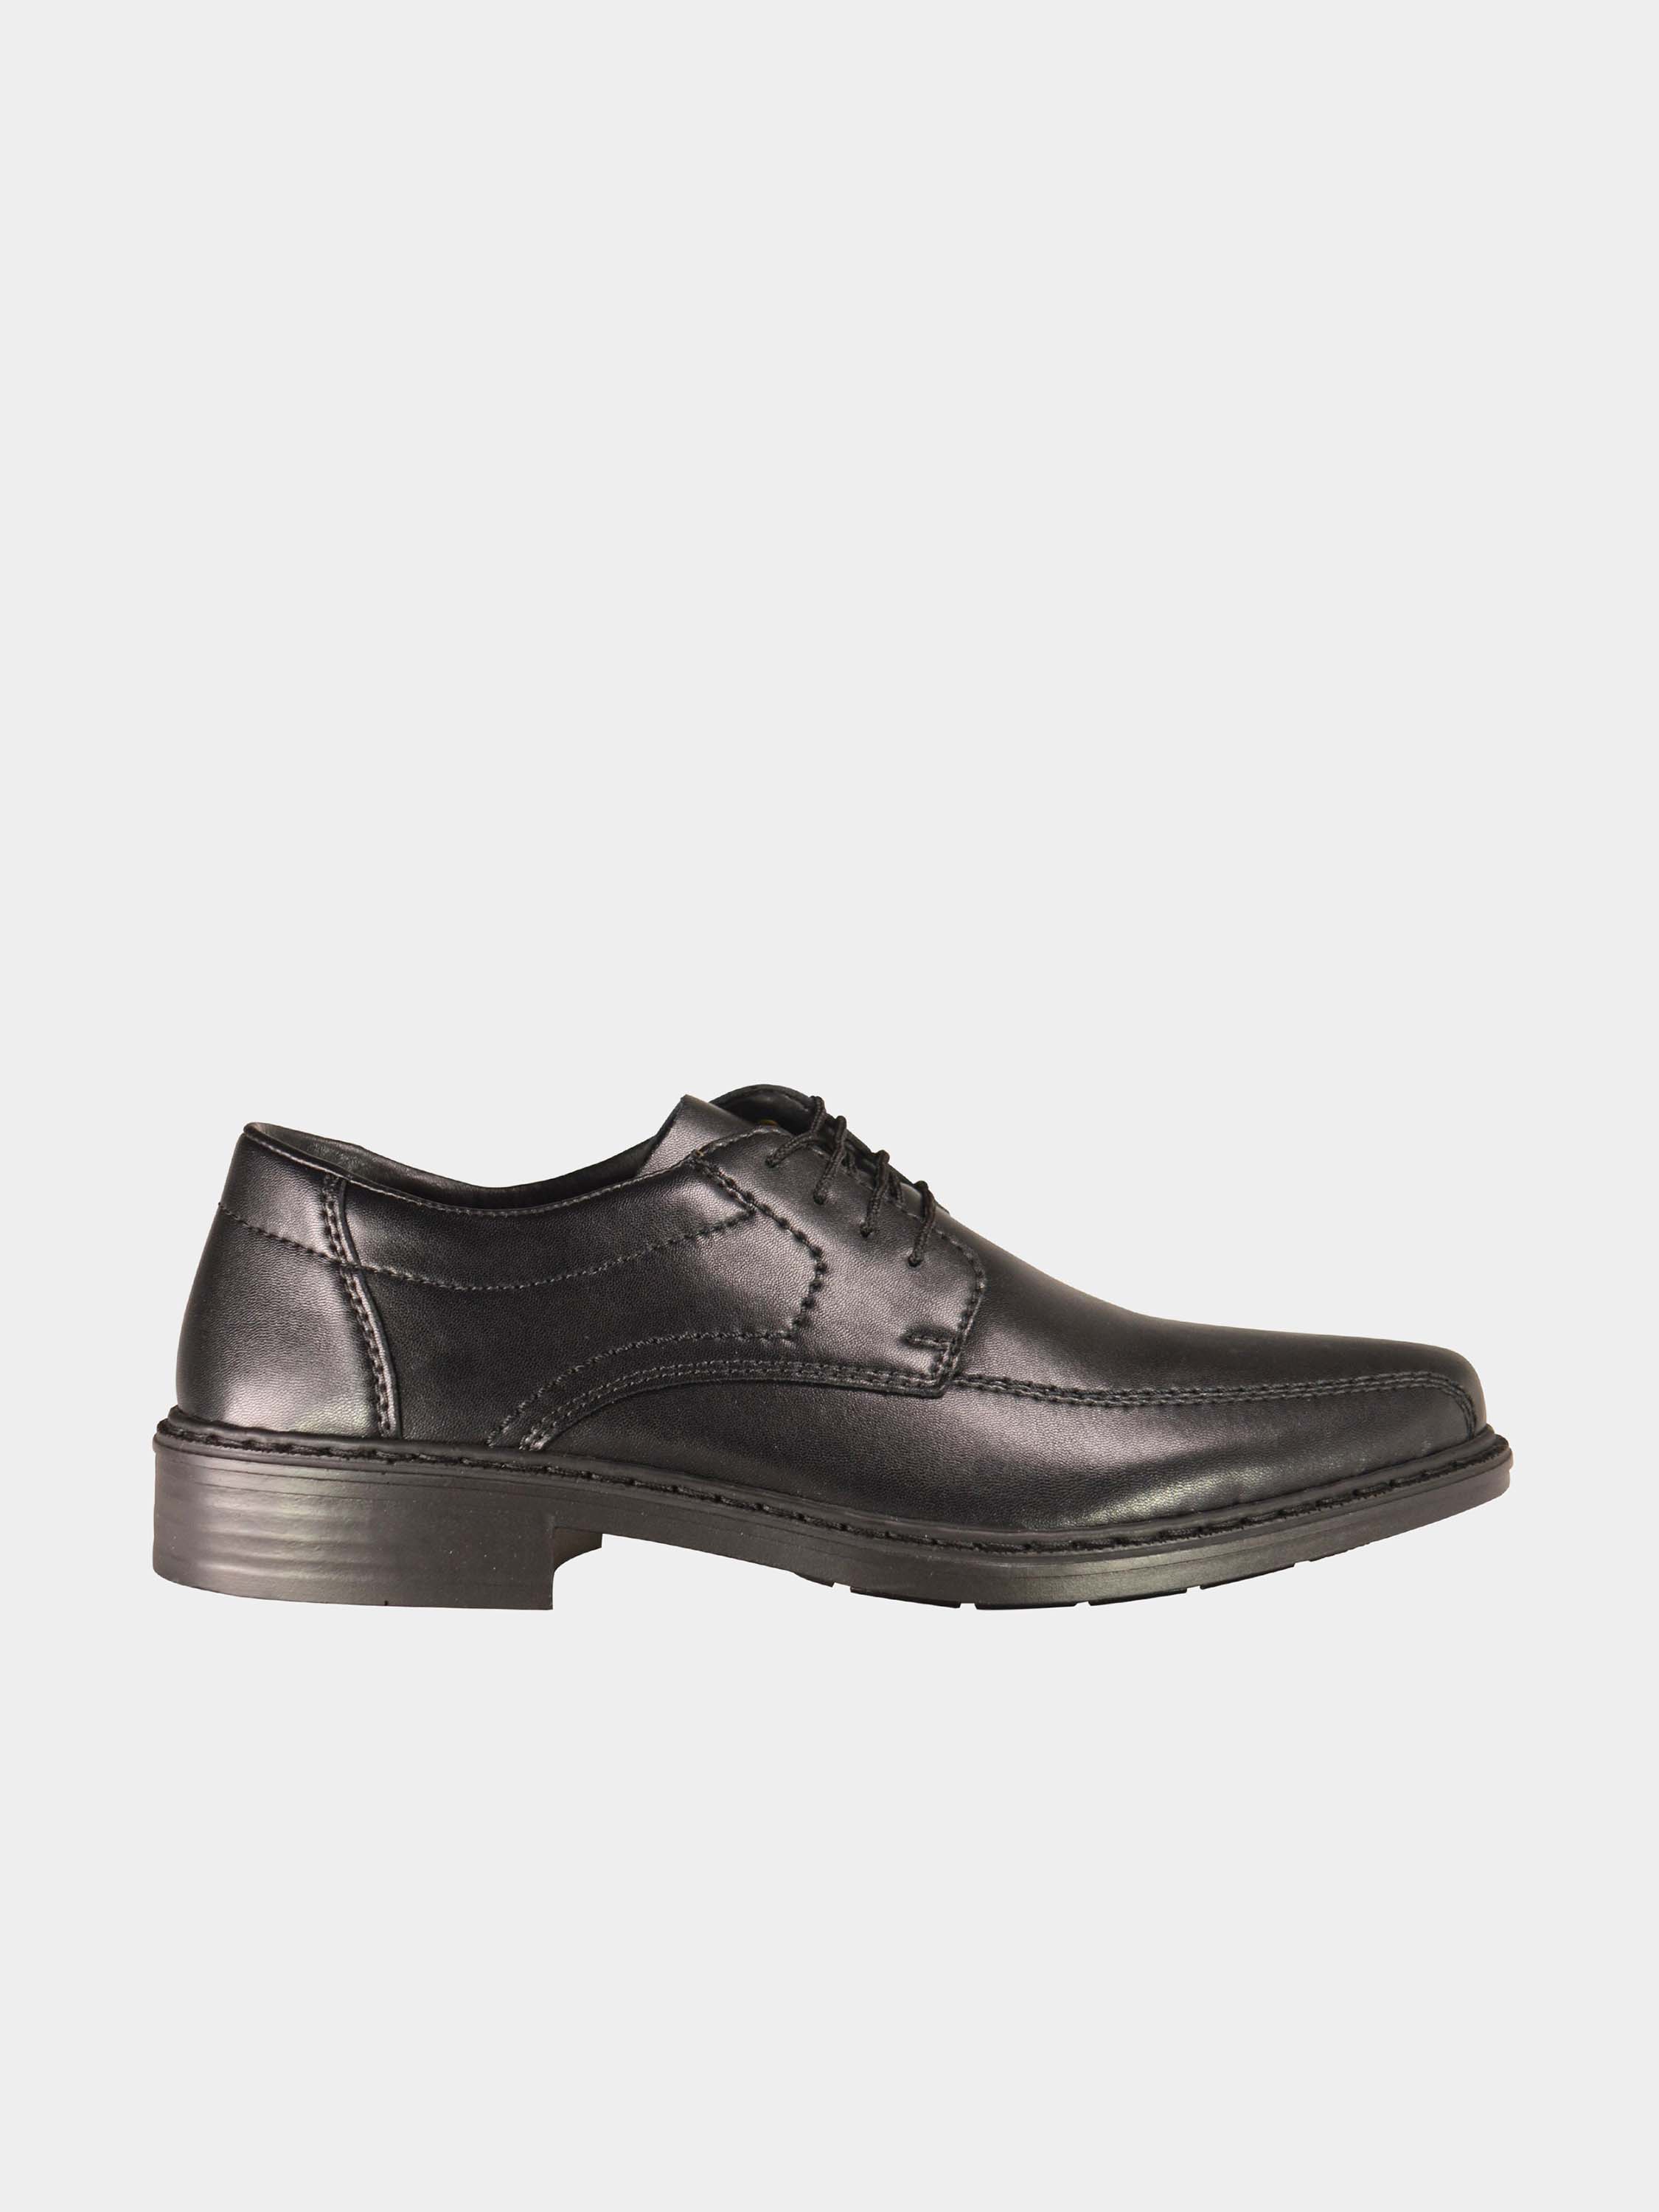 Rieker 14100 Men's Derby Formal Leather Shoes #color_Black